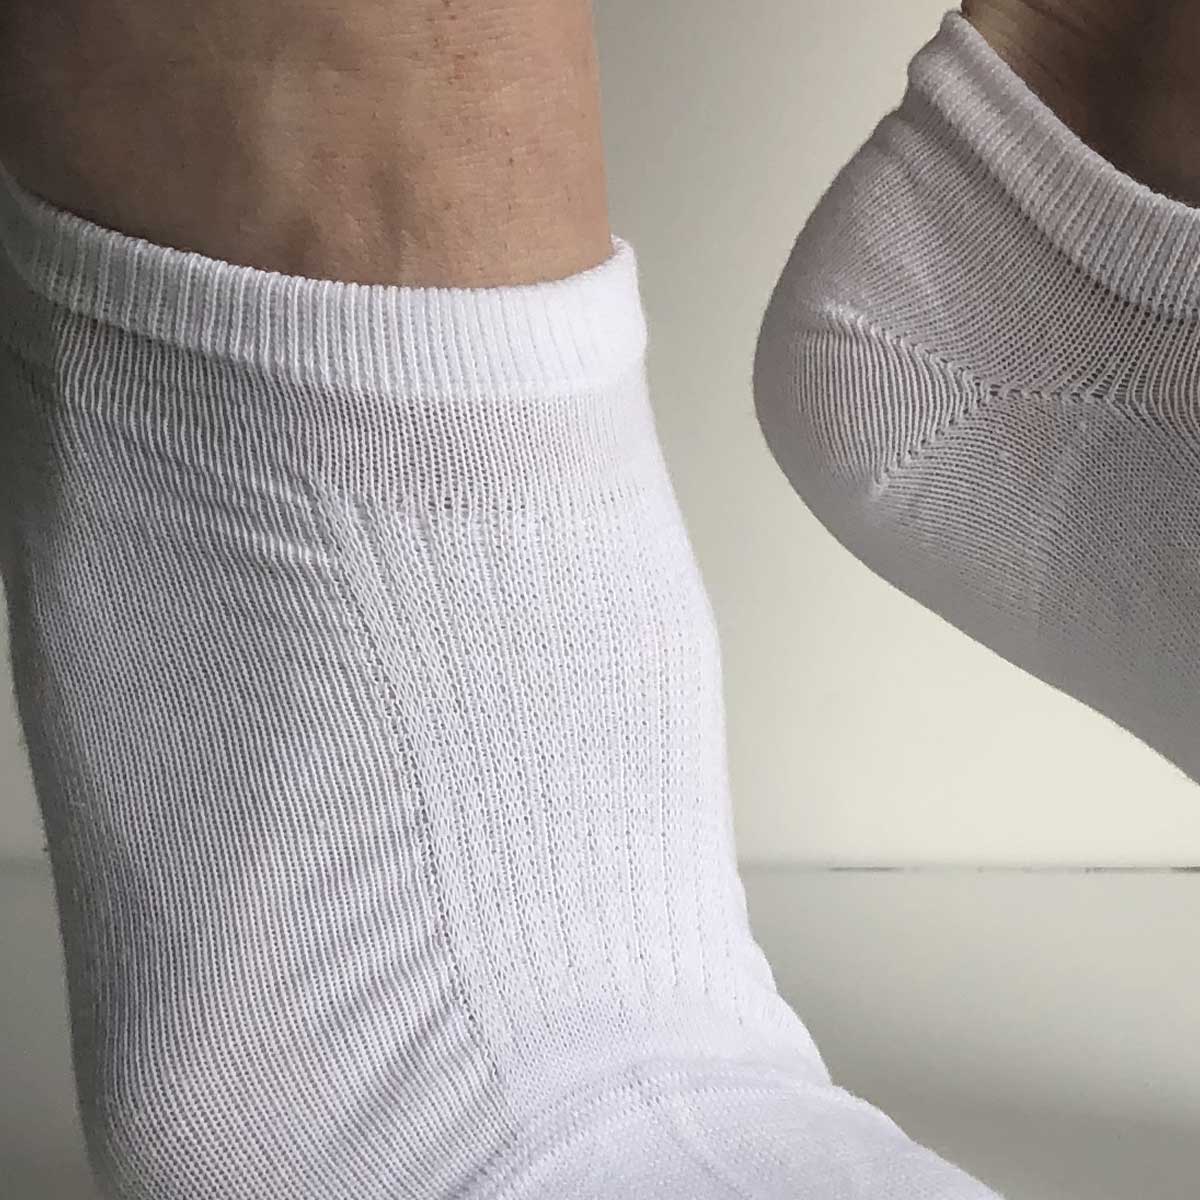 Unisex 98% cotton Active FRESHNESS ankle socks